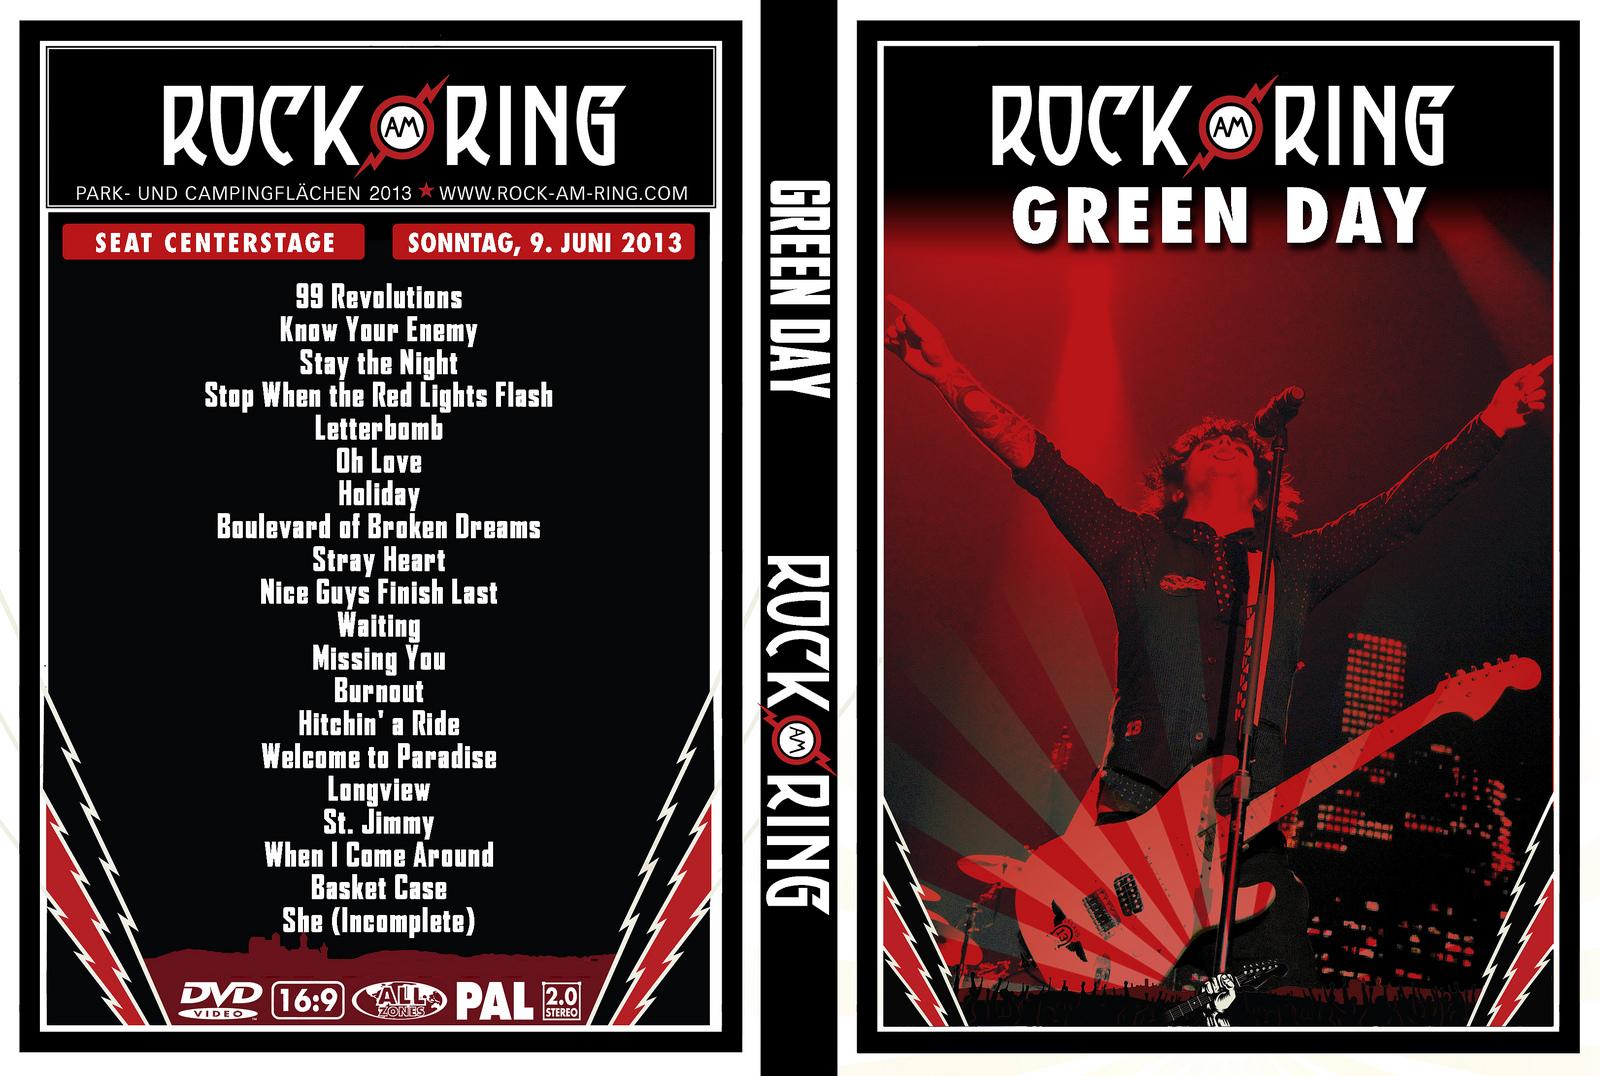 BANCA DO ROCK Rock Concert DVD: 2444 - DVD - GREEN DAY 2013 - BOOTLEG